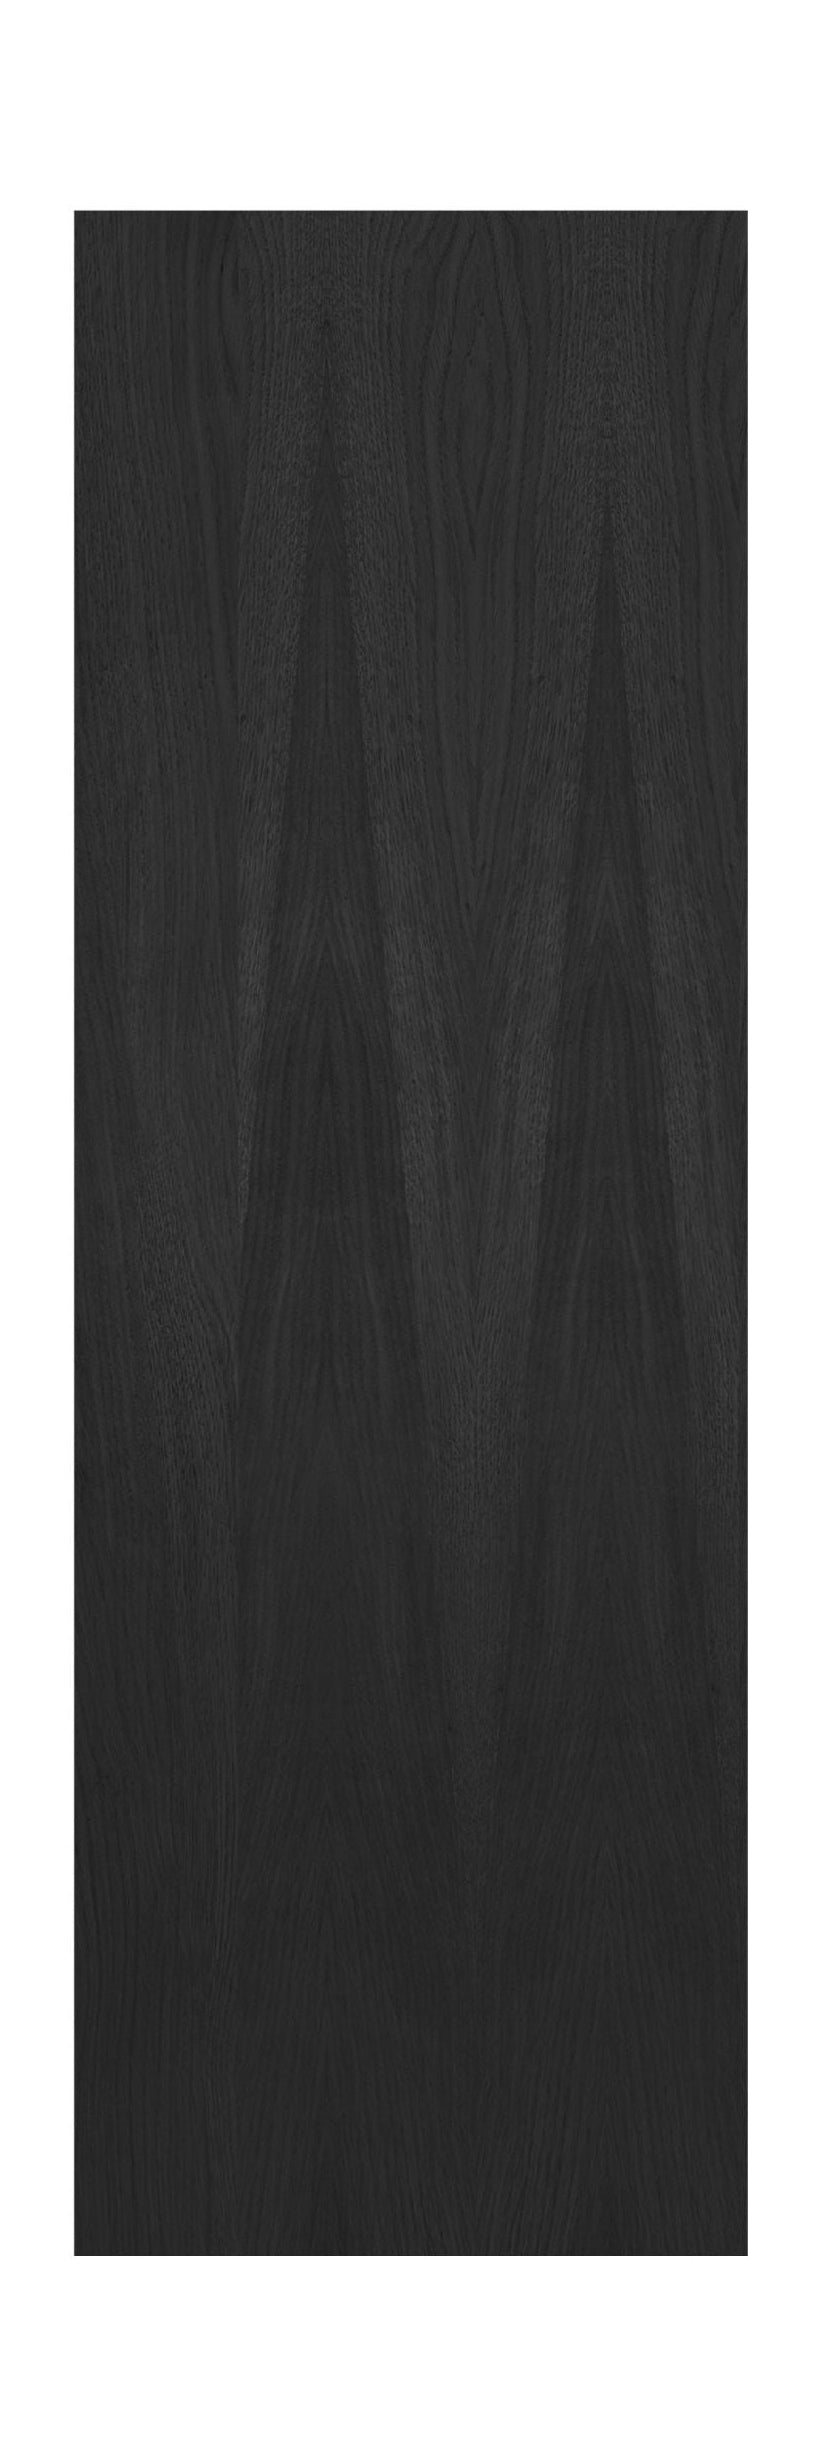 Moebe Regalsystem/Wand Regal Rückenplatte 85 cm, schwarz